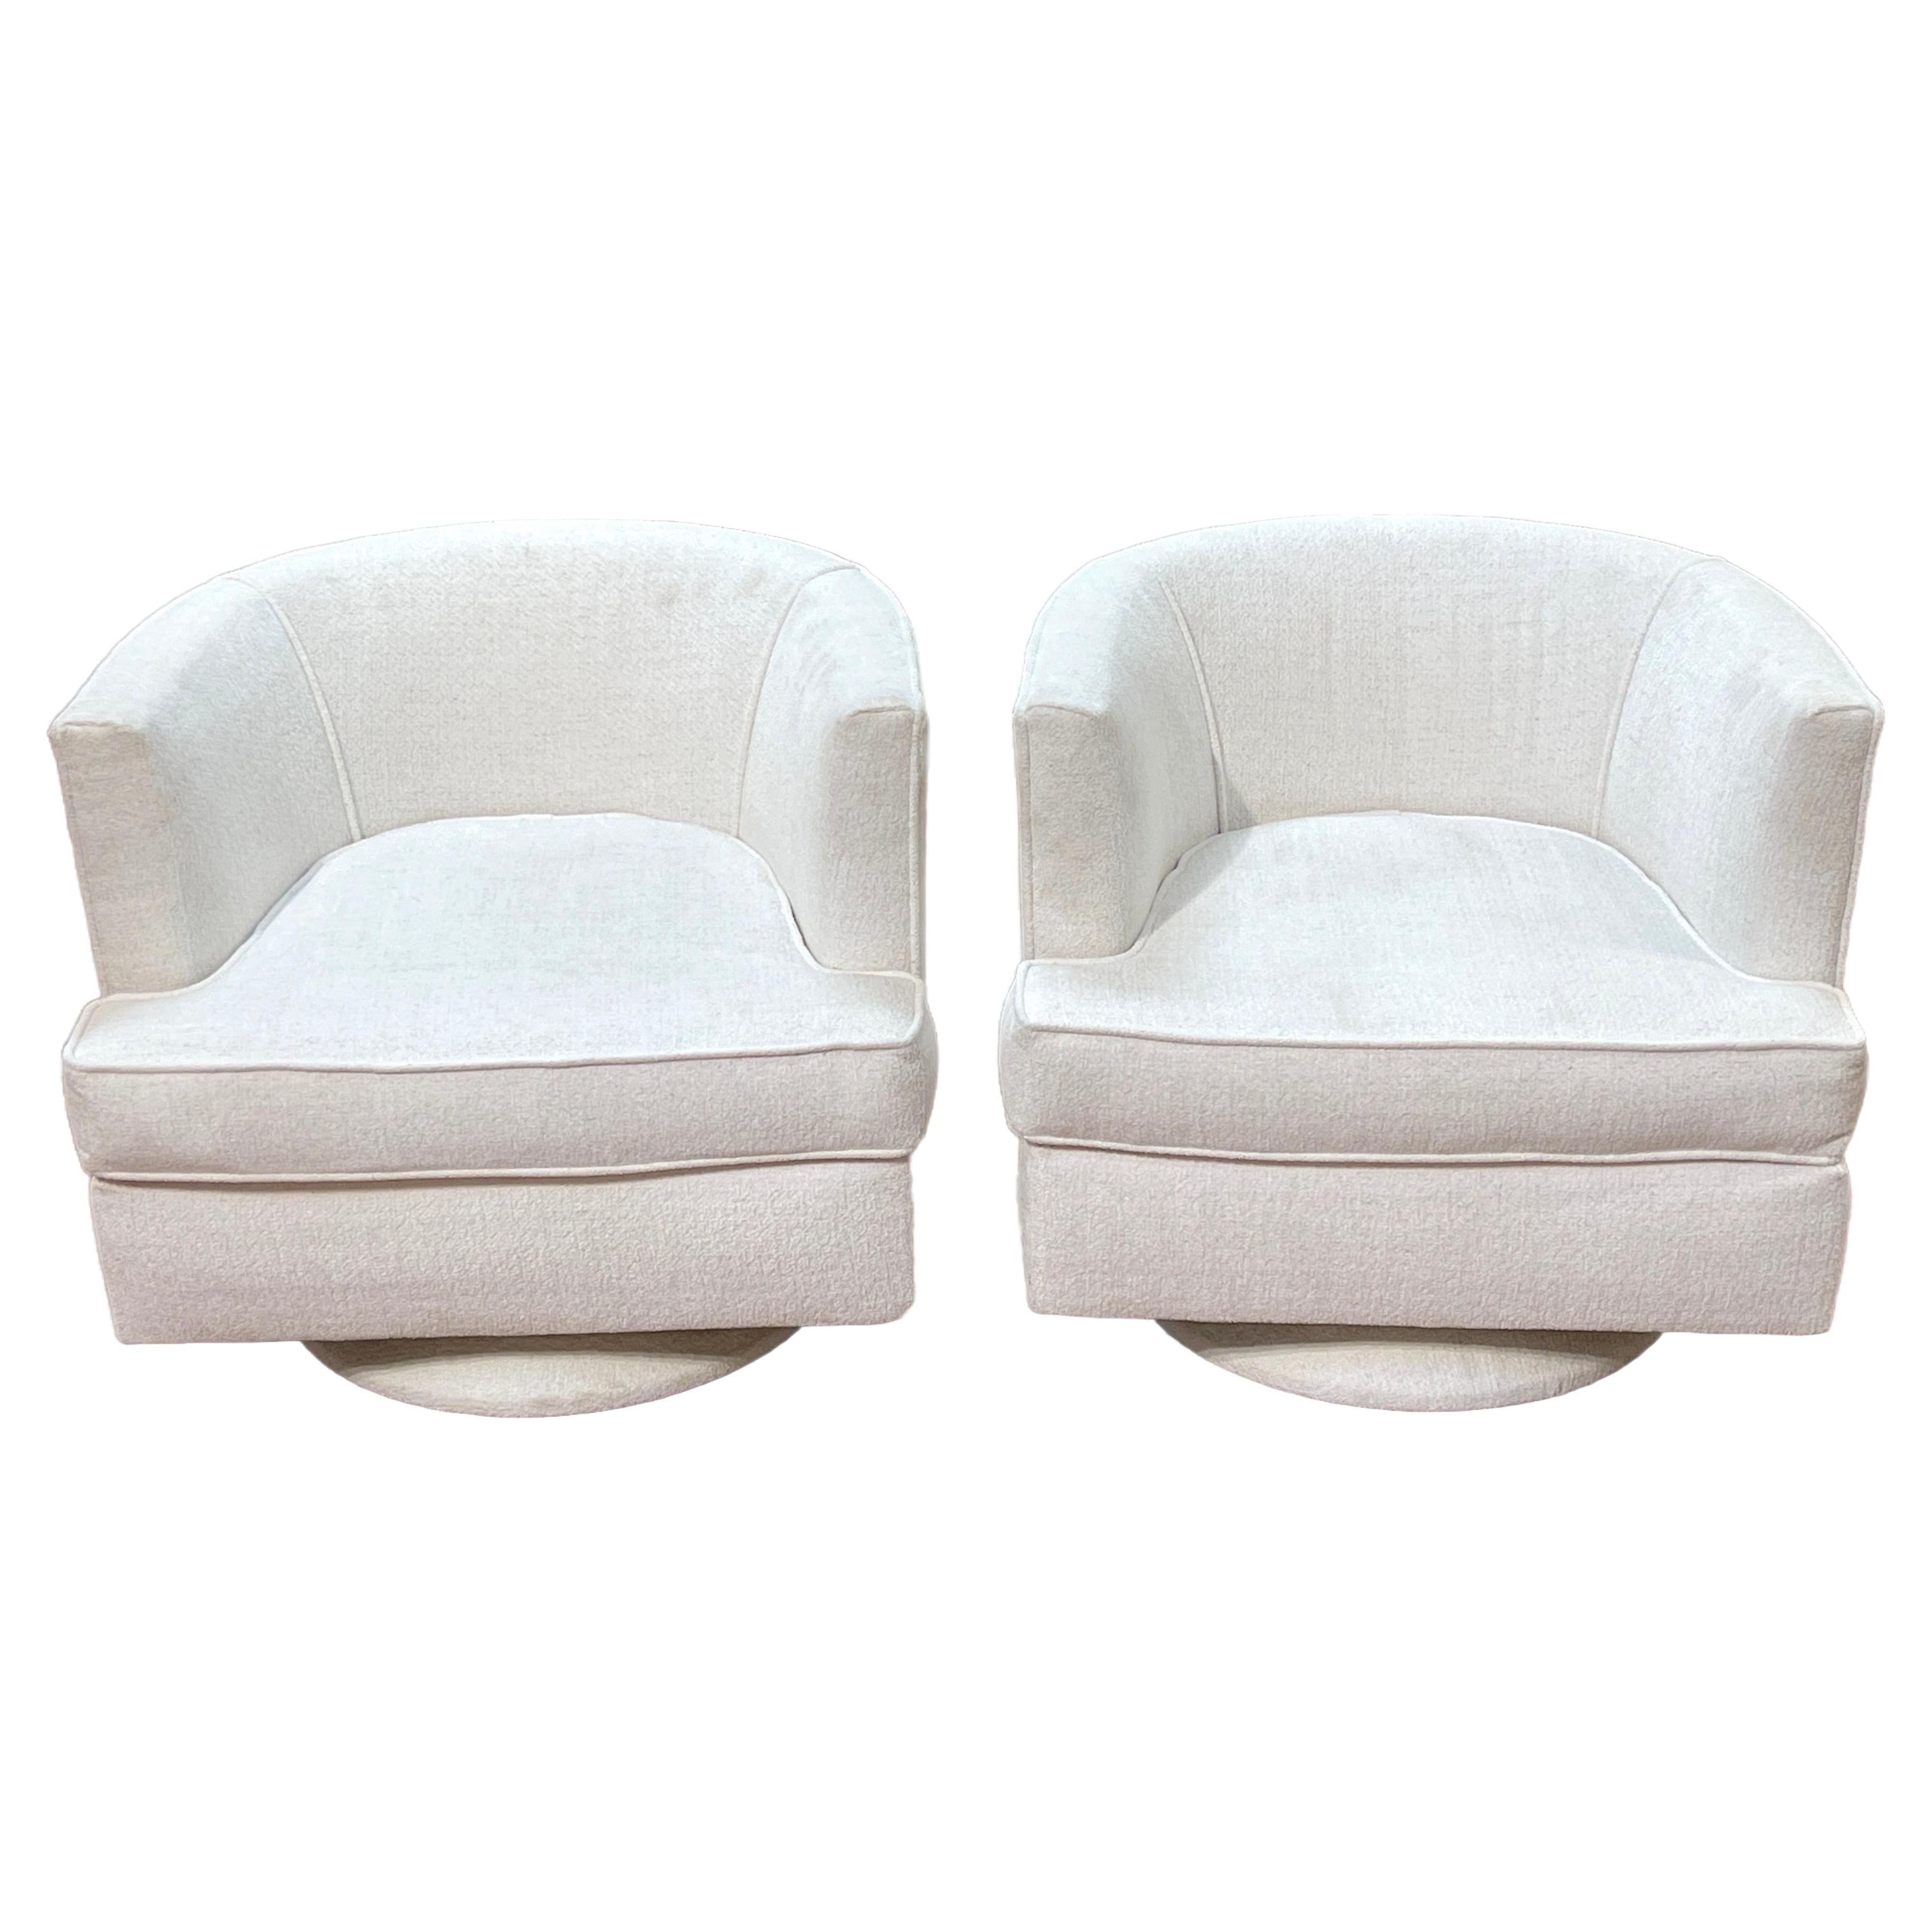 Pair of Sleek Mid-Century Modern Swivel Chairs Kravet Boucle Fabric, C. 1970s For Sale